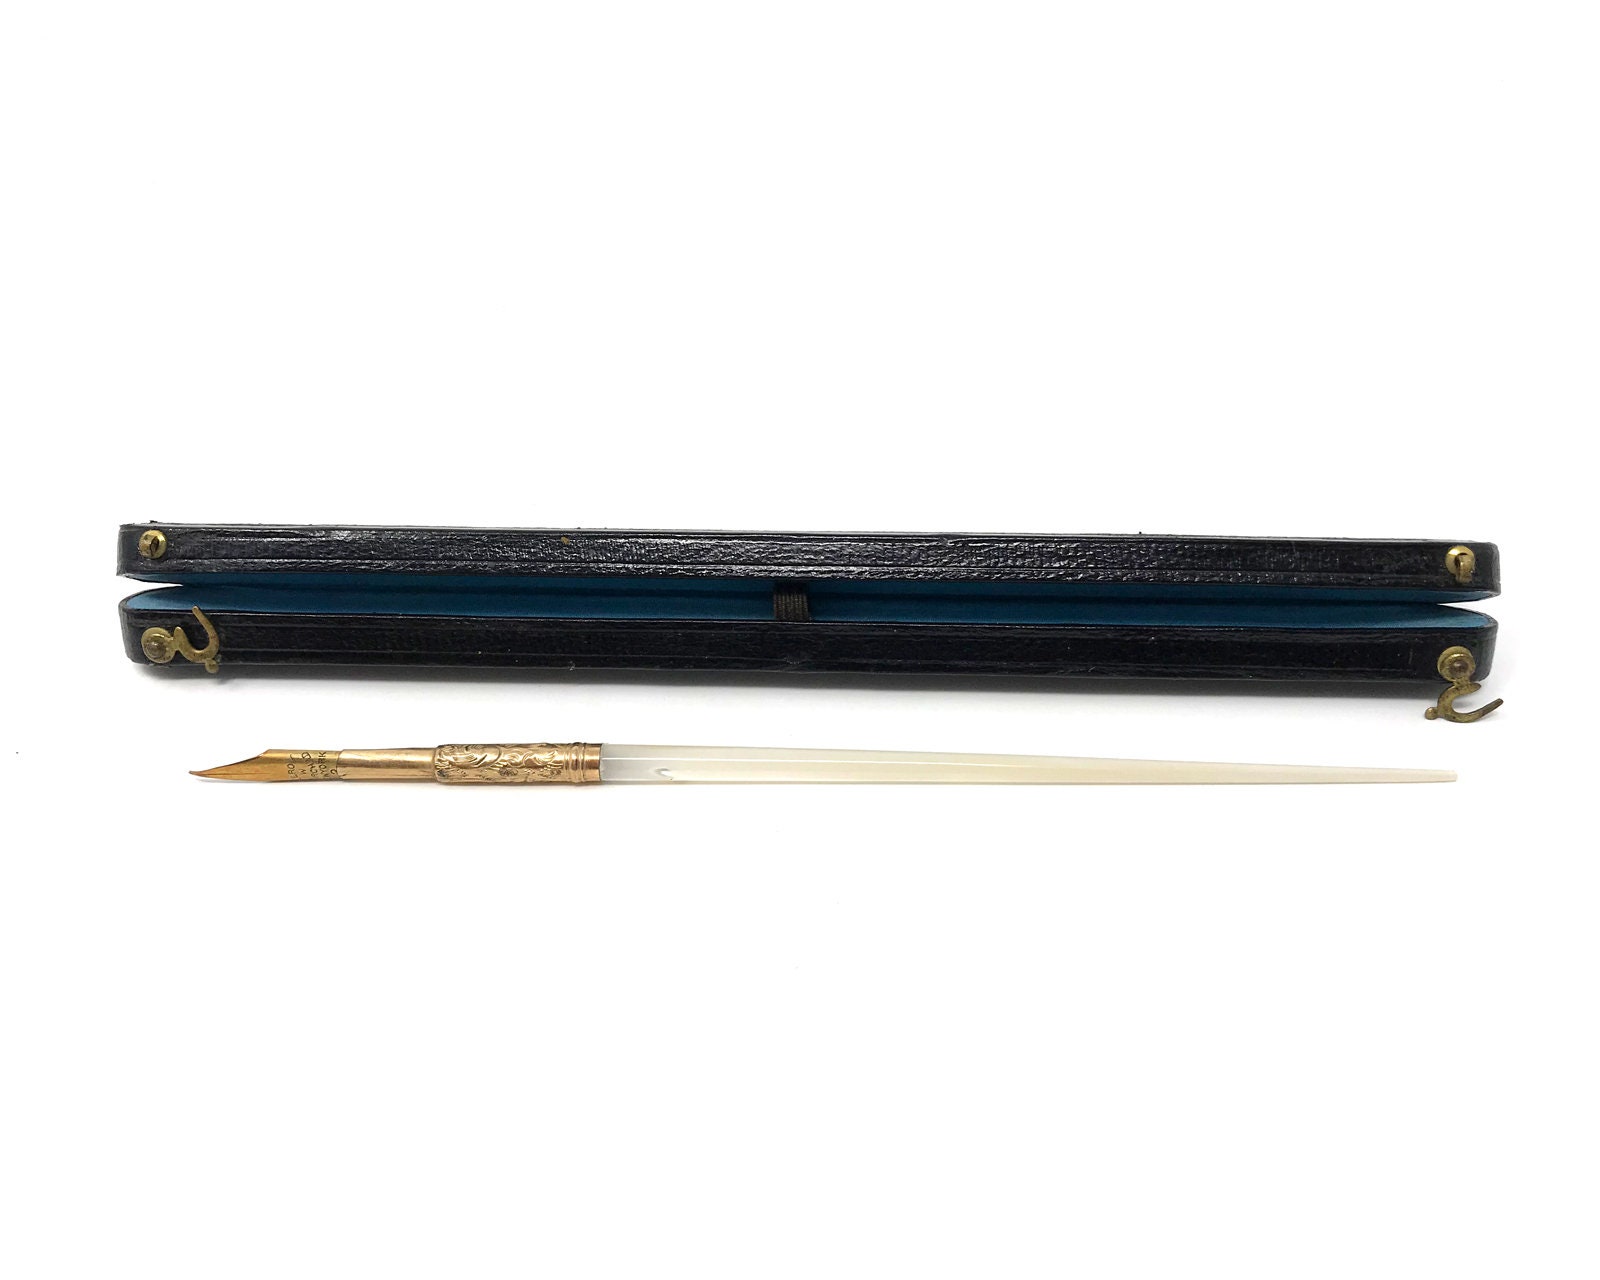 UNI Fine Line Pen Technical Drawing Pens / Art Pen Set of 6 0.05mm 0.8mm 